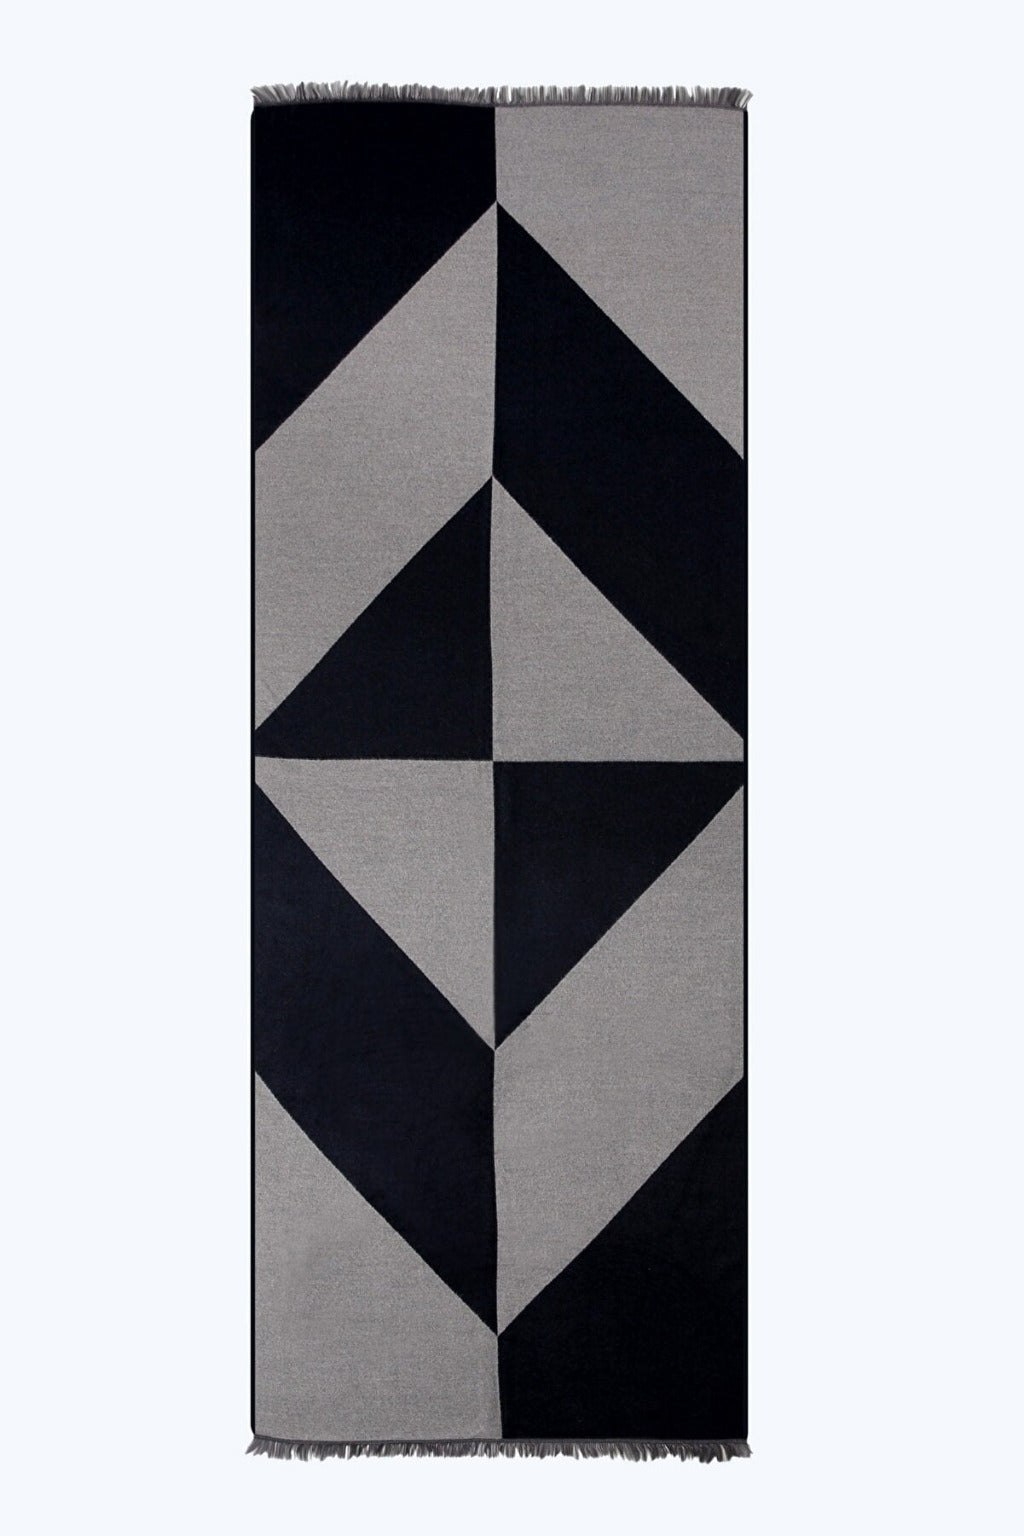 Symmetric Mo-shmeres Triangles Dual Tone - Gray Black